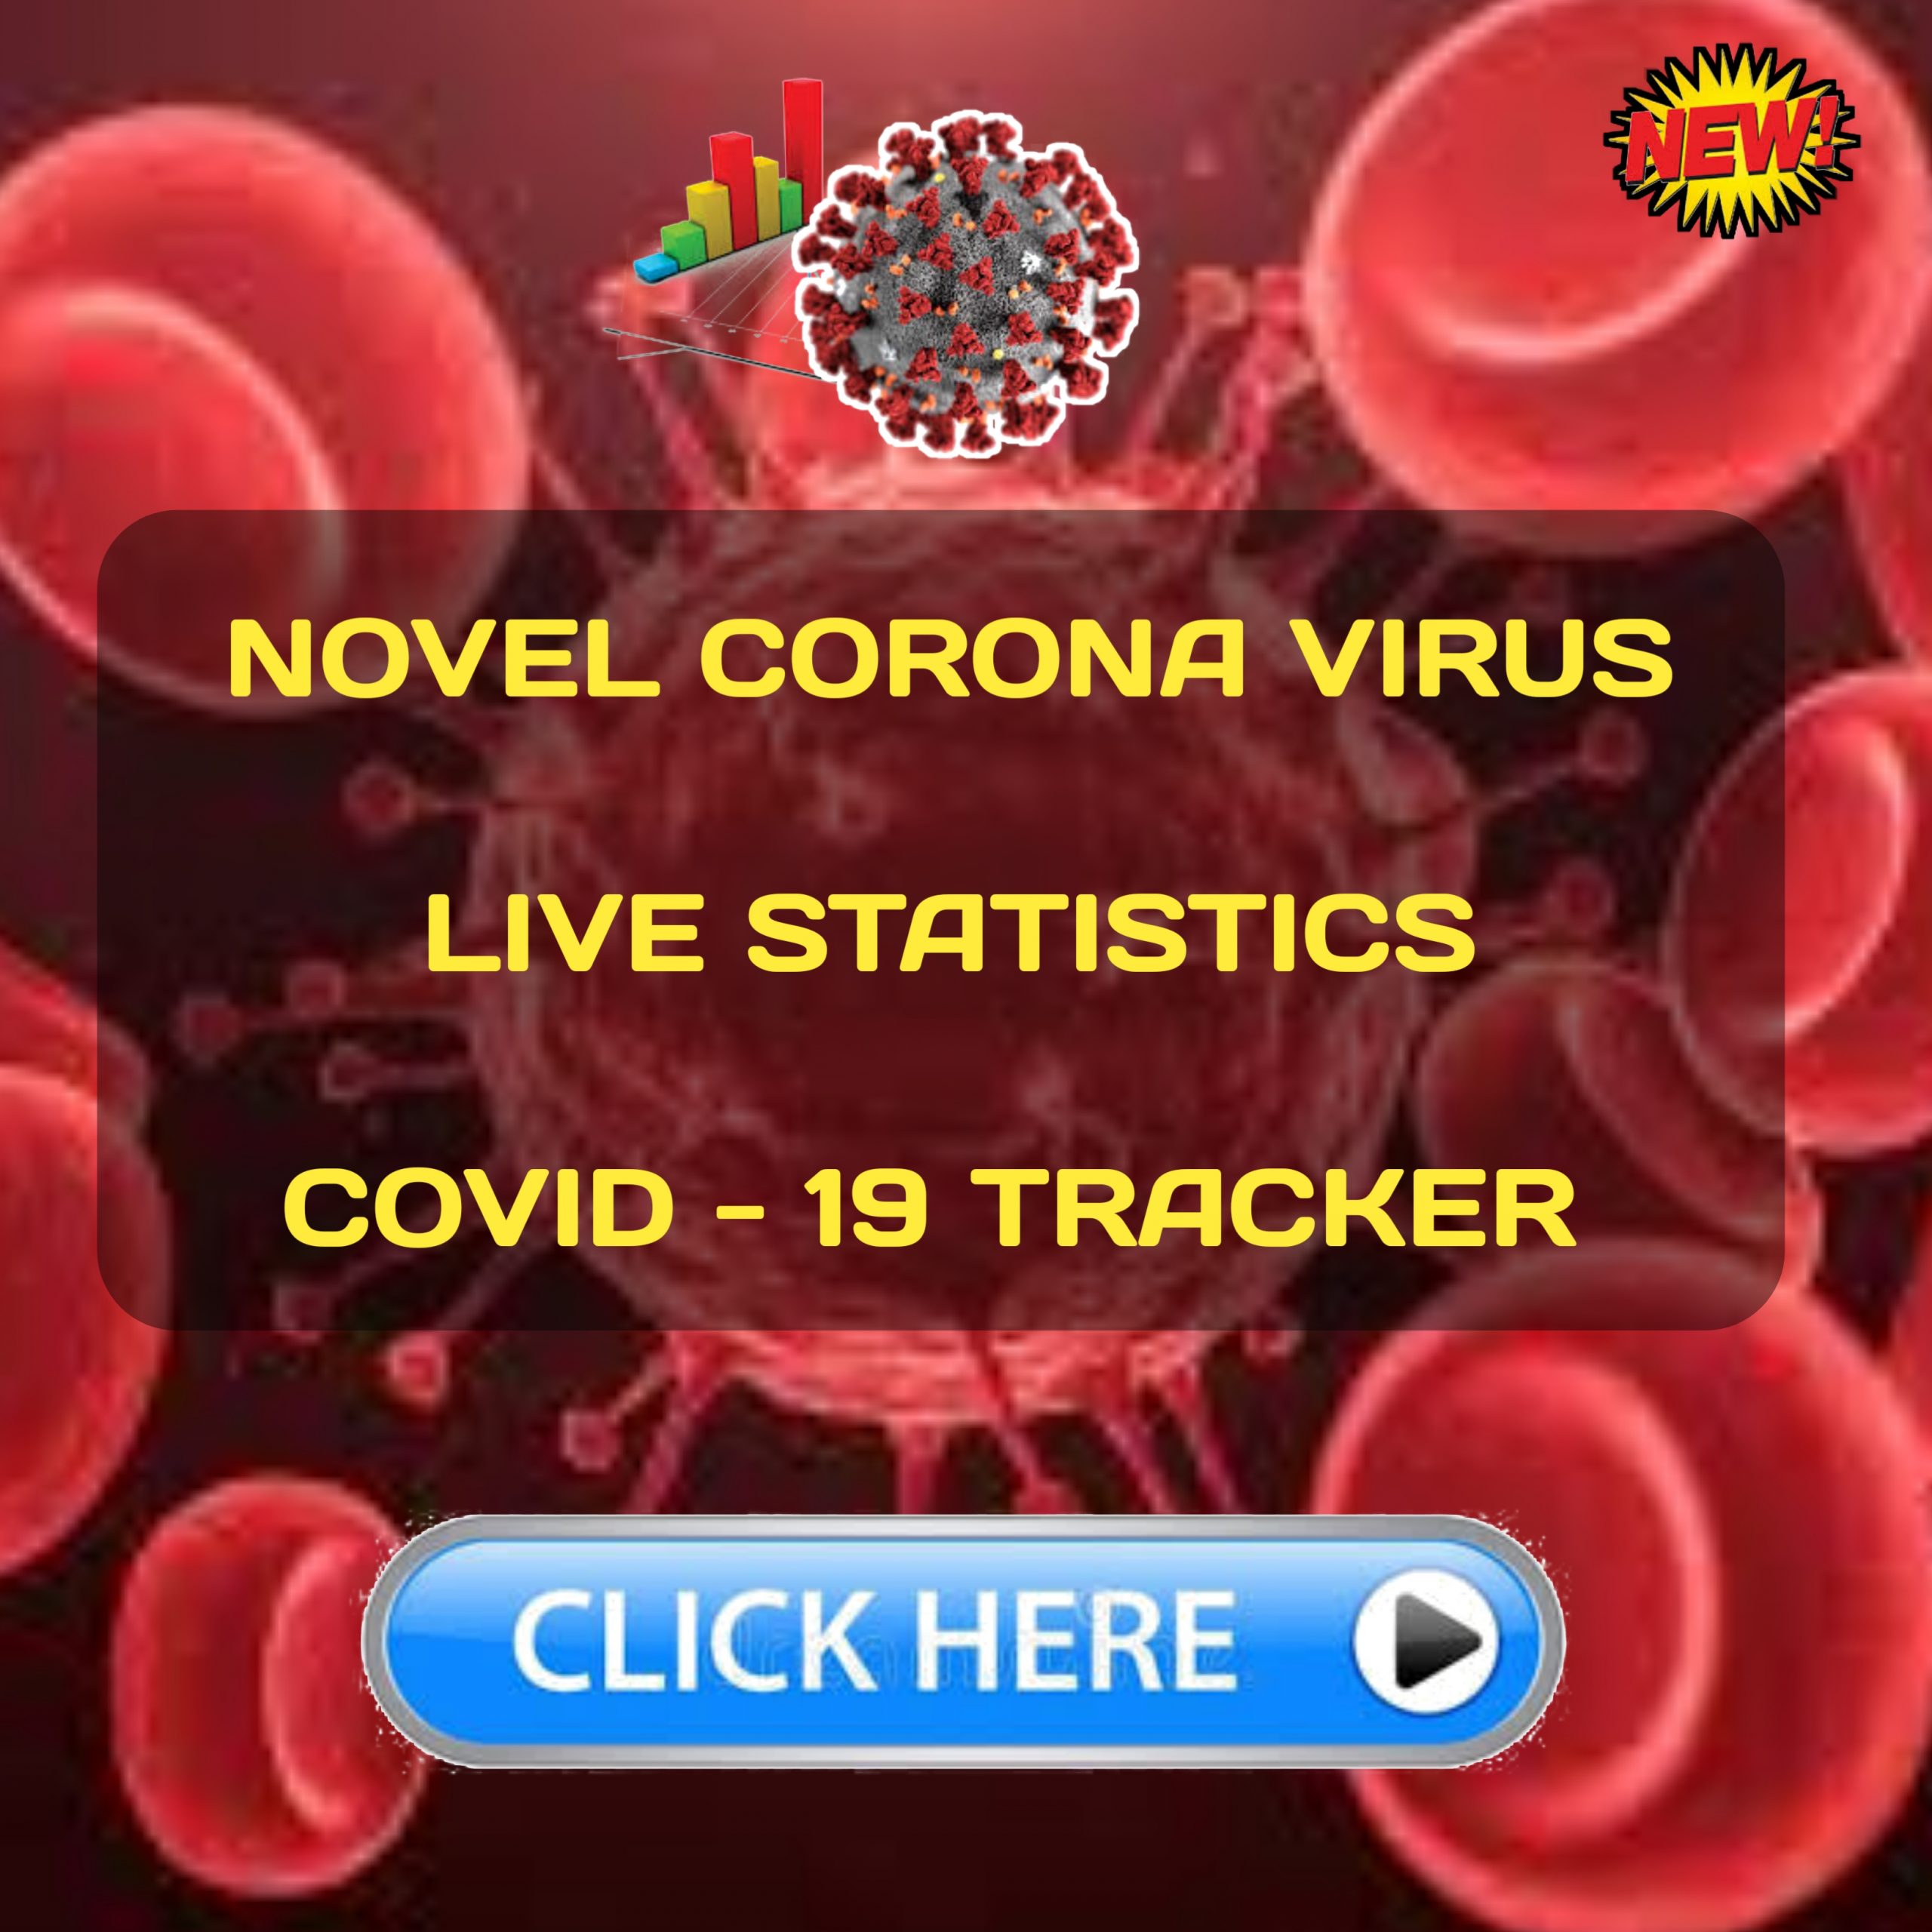 Corona Virus Live Statistics Global - Novel Corona Virus Covid19 Tracker For All County Like Us Uk Canada England Rusiya India China Taiwan Japan Etc..